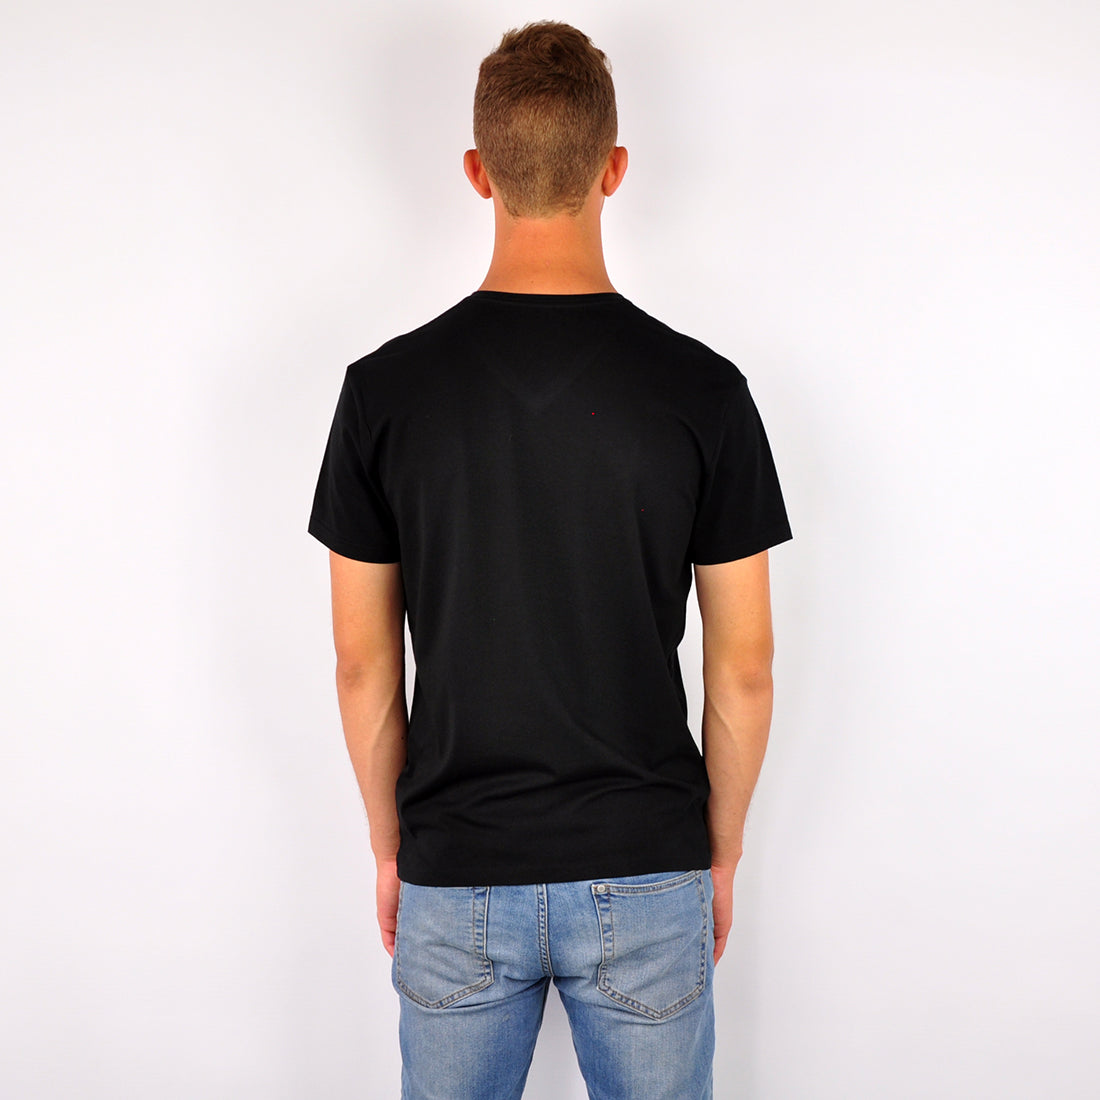 Markus №3 | Leicht tailliert geschnittenes T-Shirt mit V-Ausschnitt